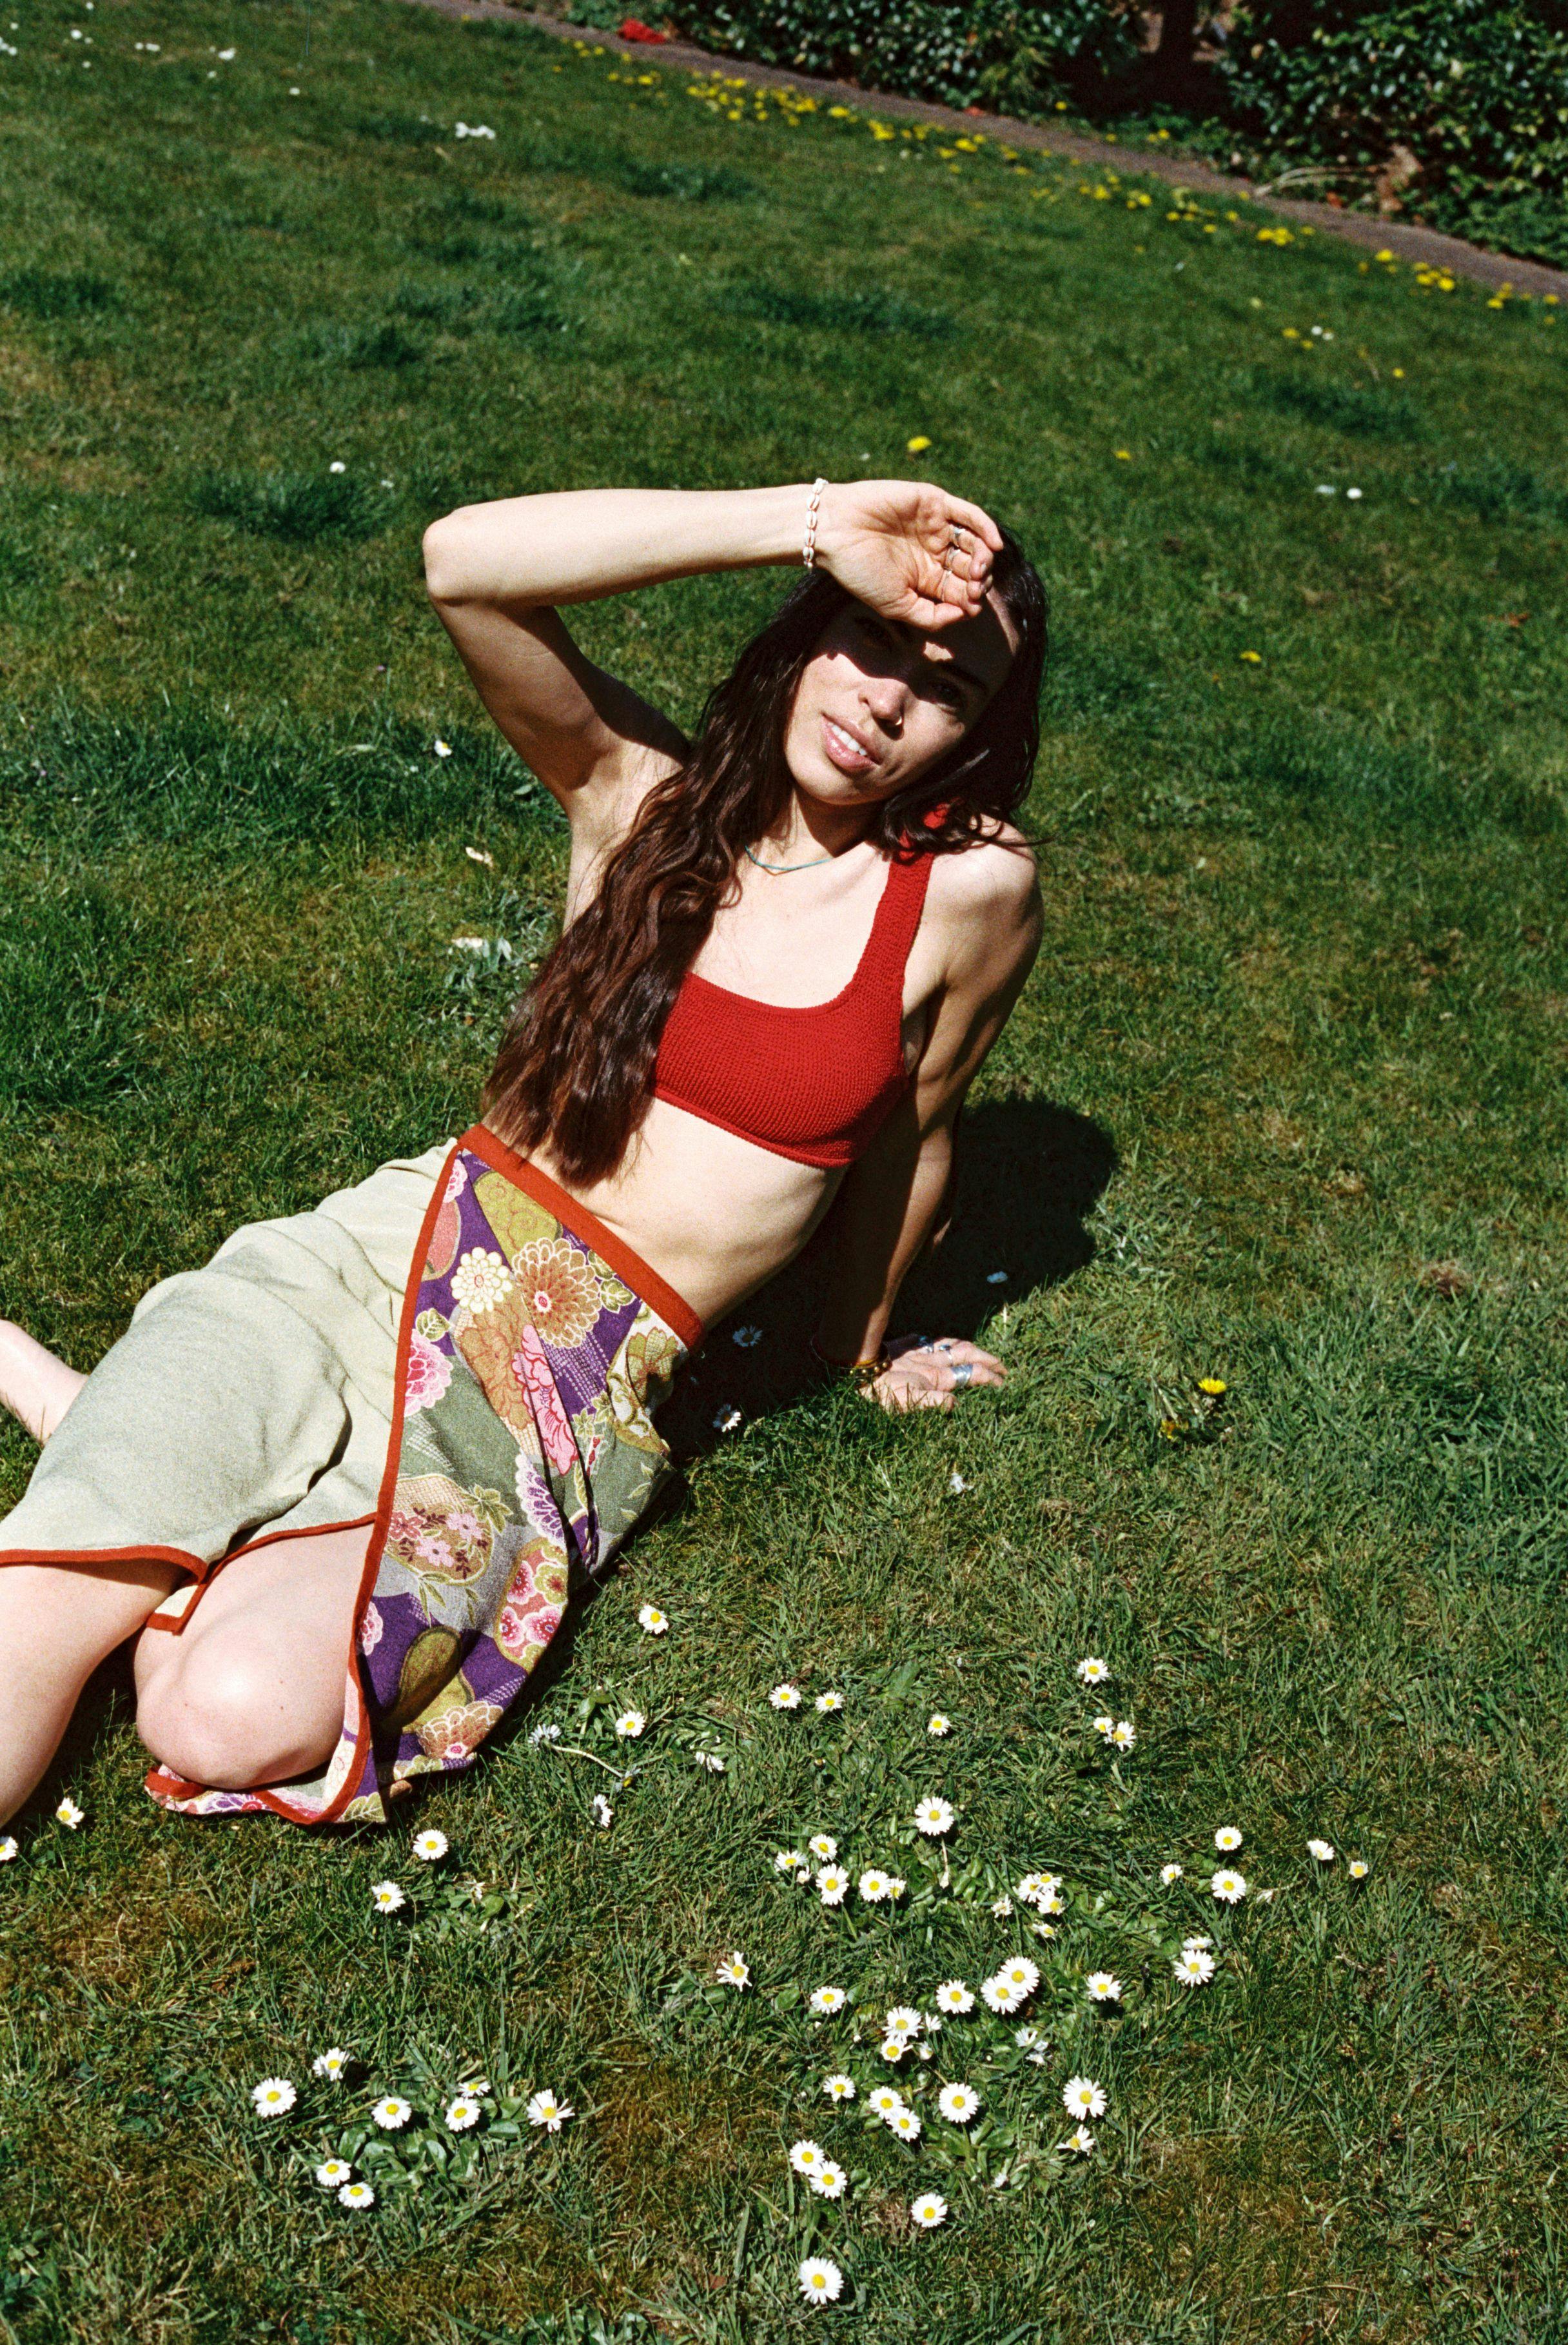 Jaz O'Hara in red bikini and skirt, lying on grass